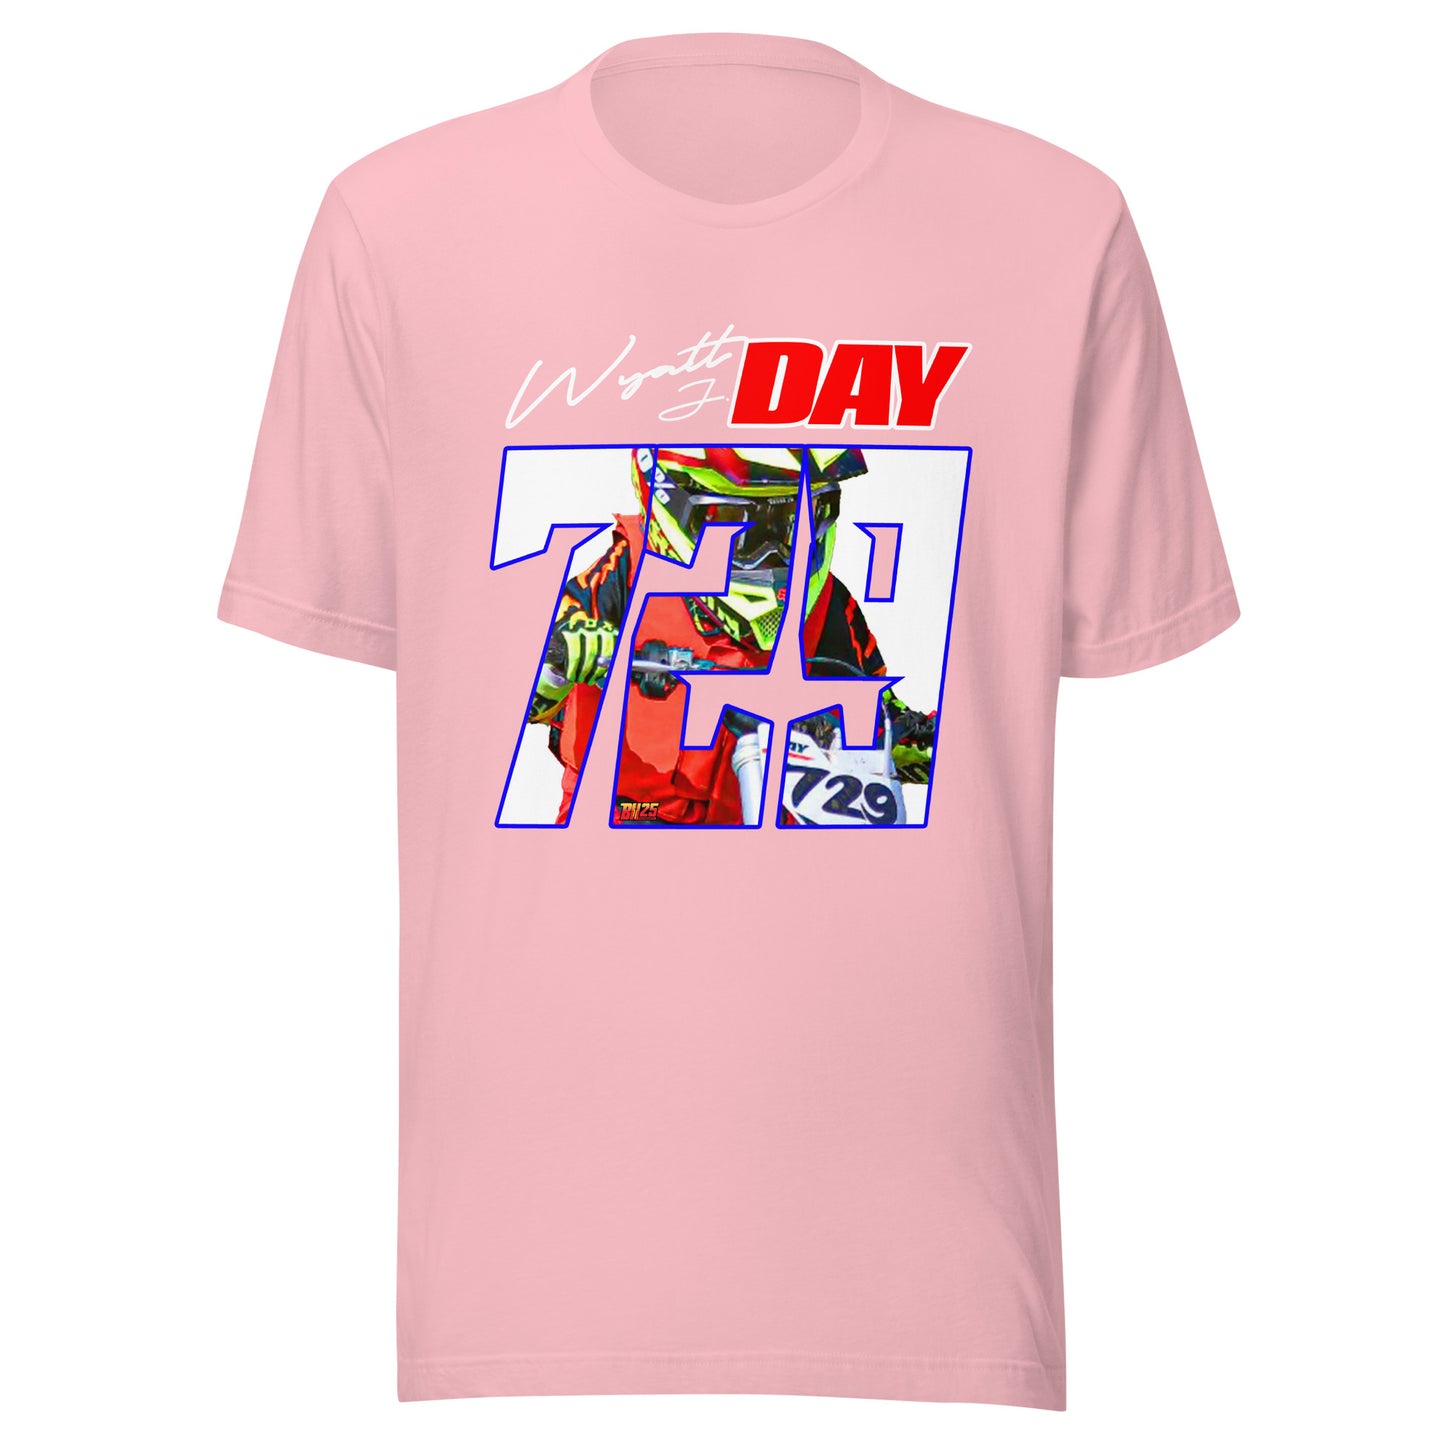 Wyatt Day 729 T-Shirt